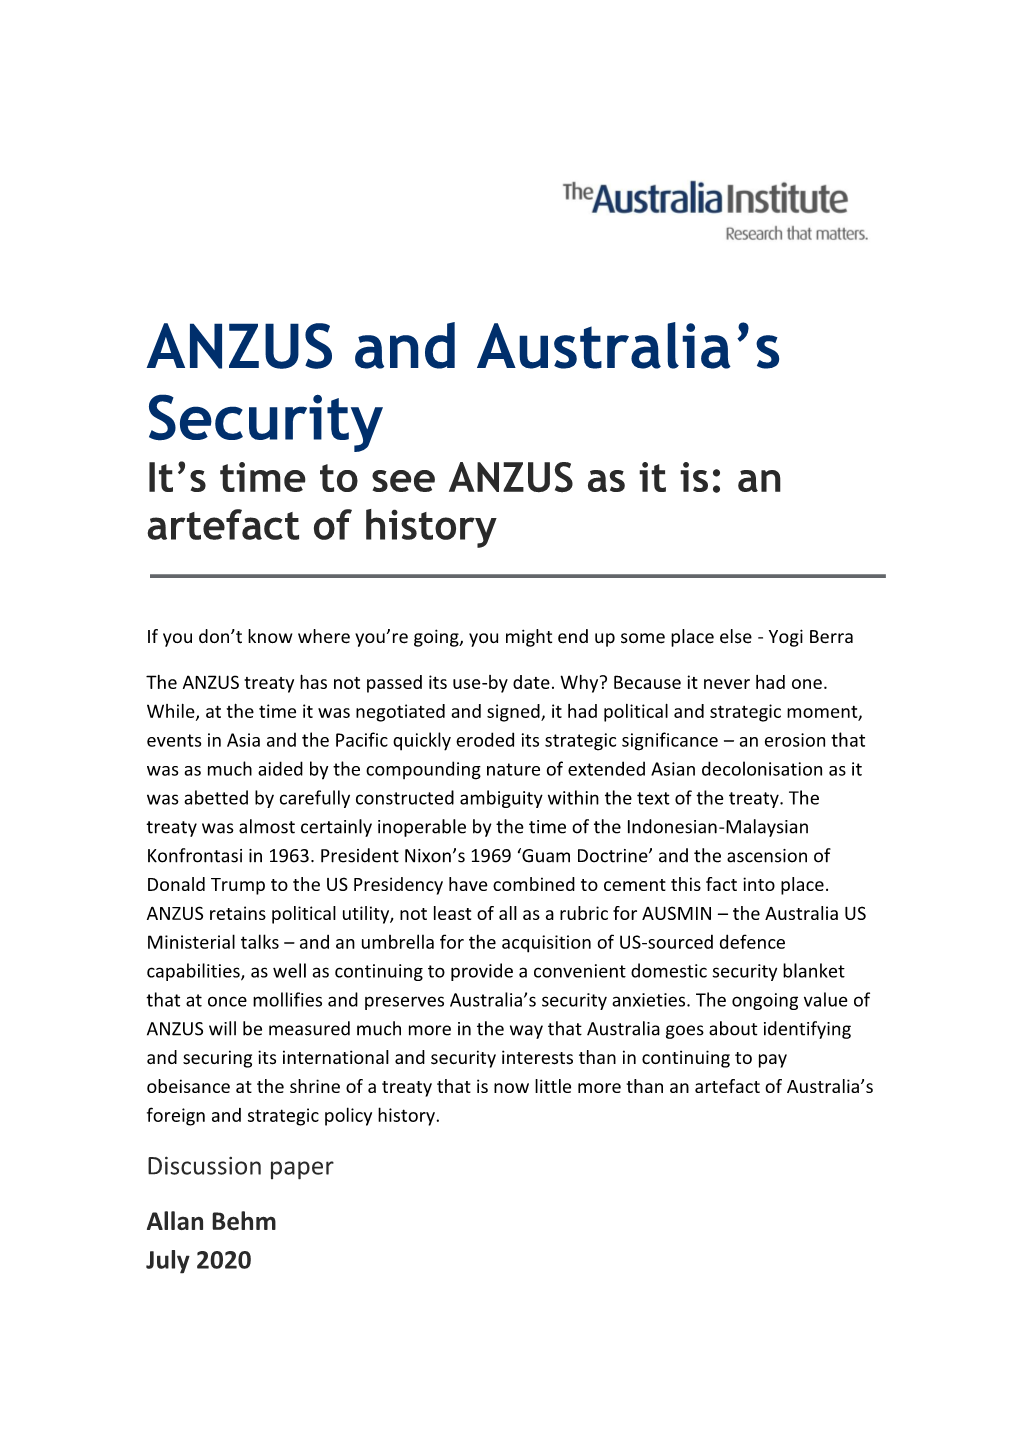 ANZUS and Australia's Security